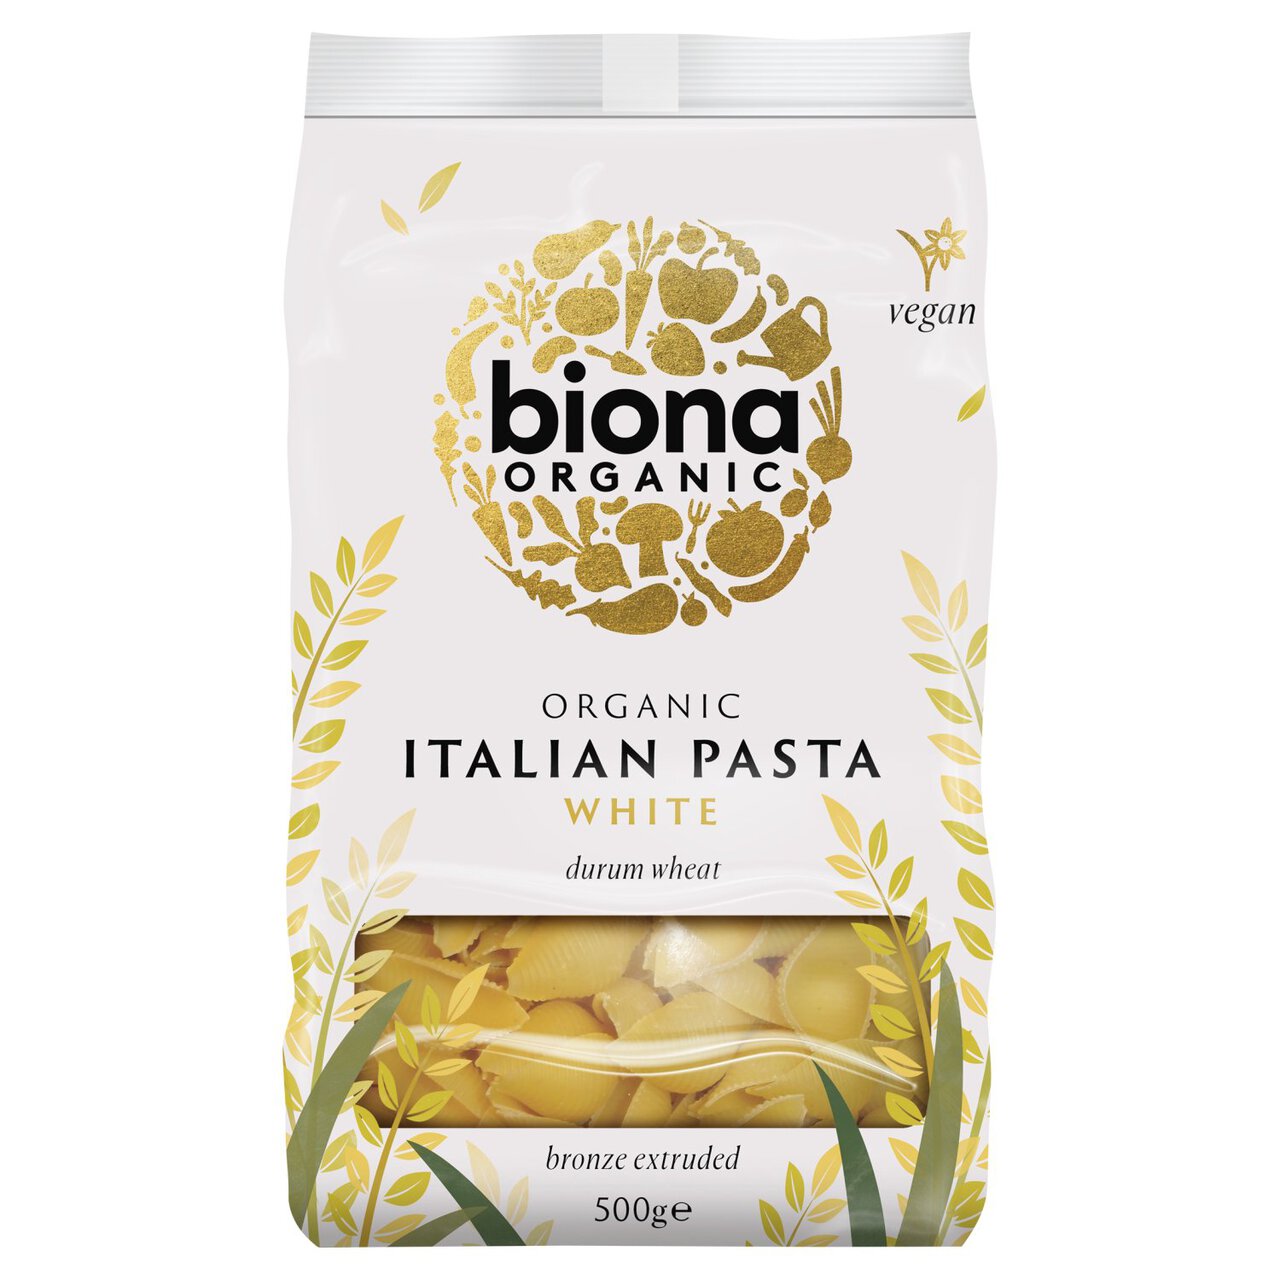 Biona Organic White Conchiglie Pasta 500g